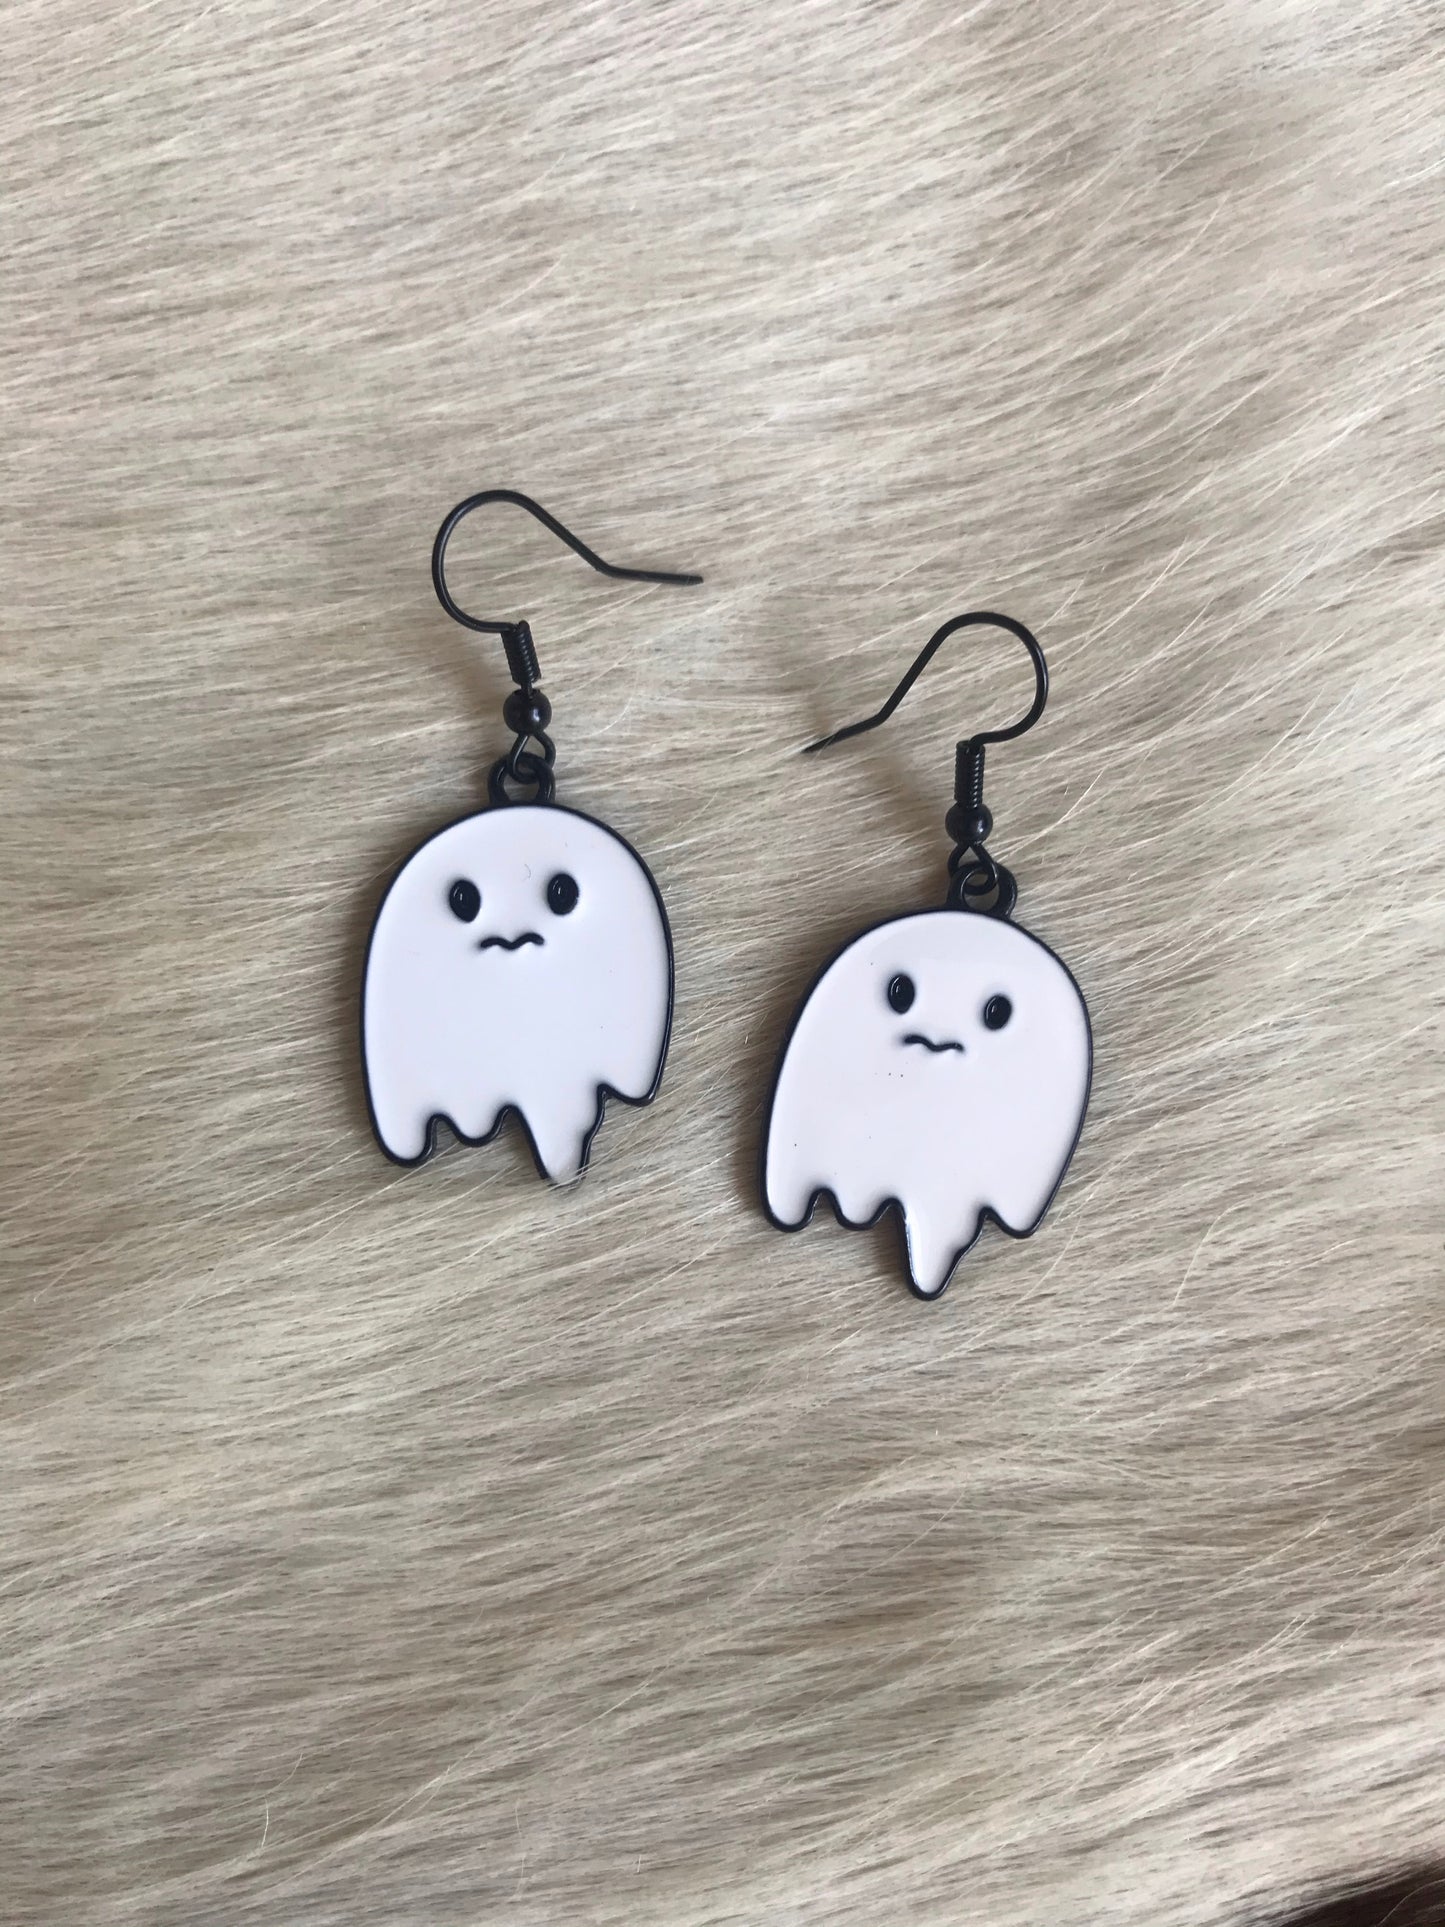 Cute Cranky Ghost Earrings